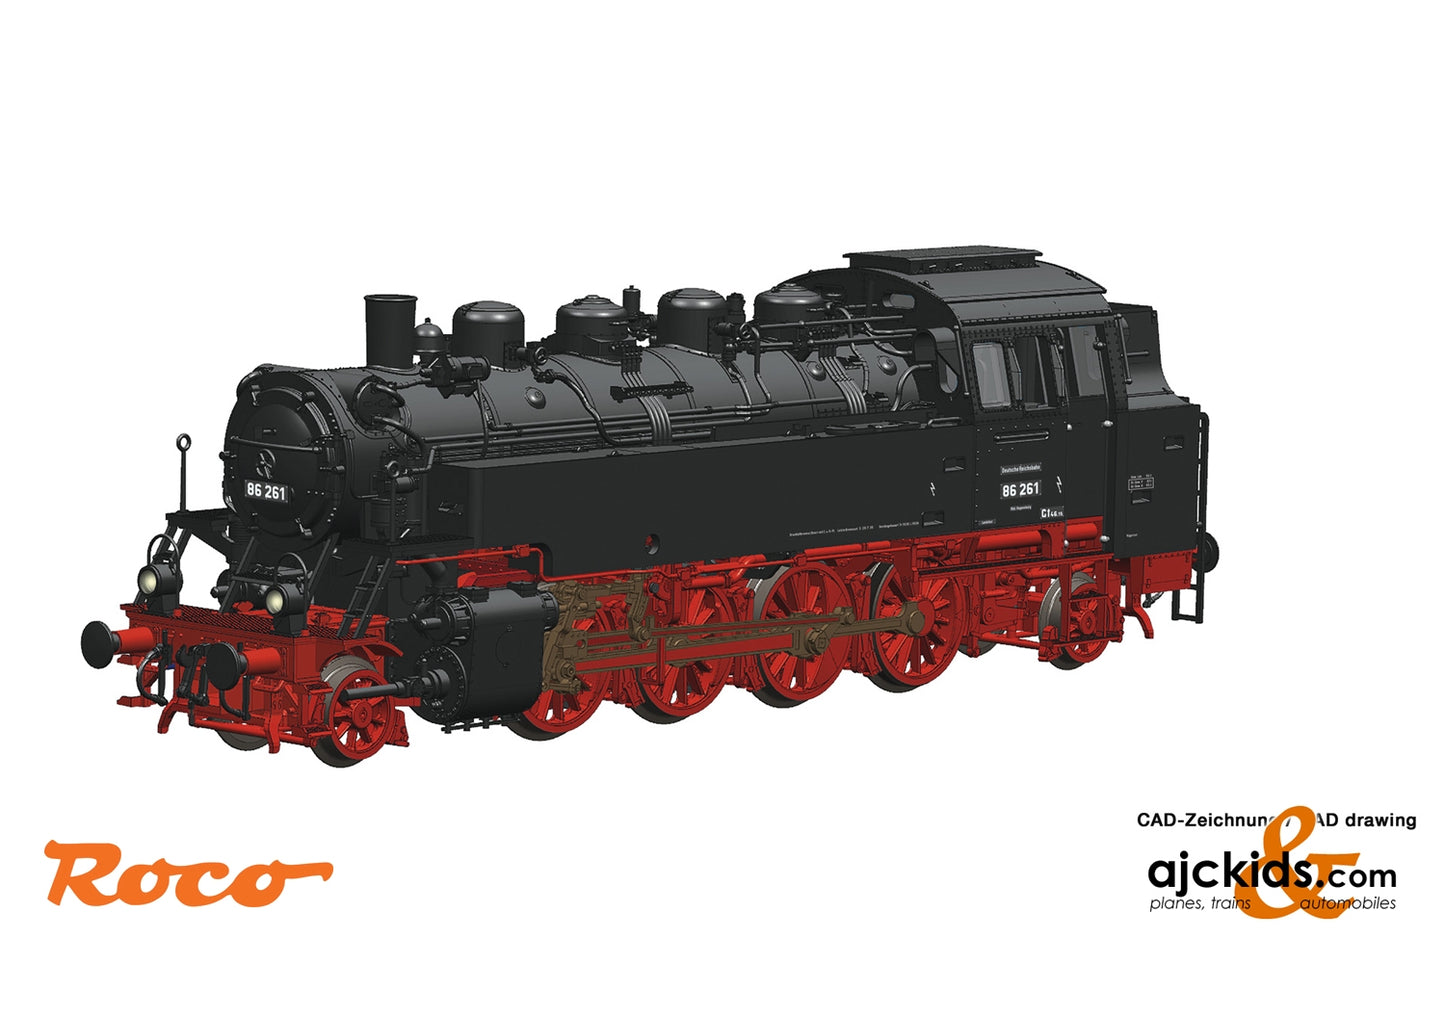 Roco 73027 - Steam locomotive 86 261